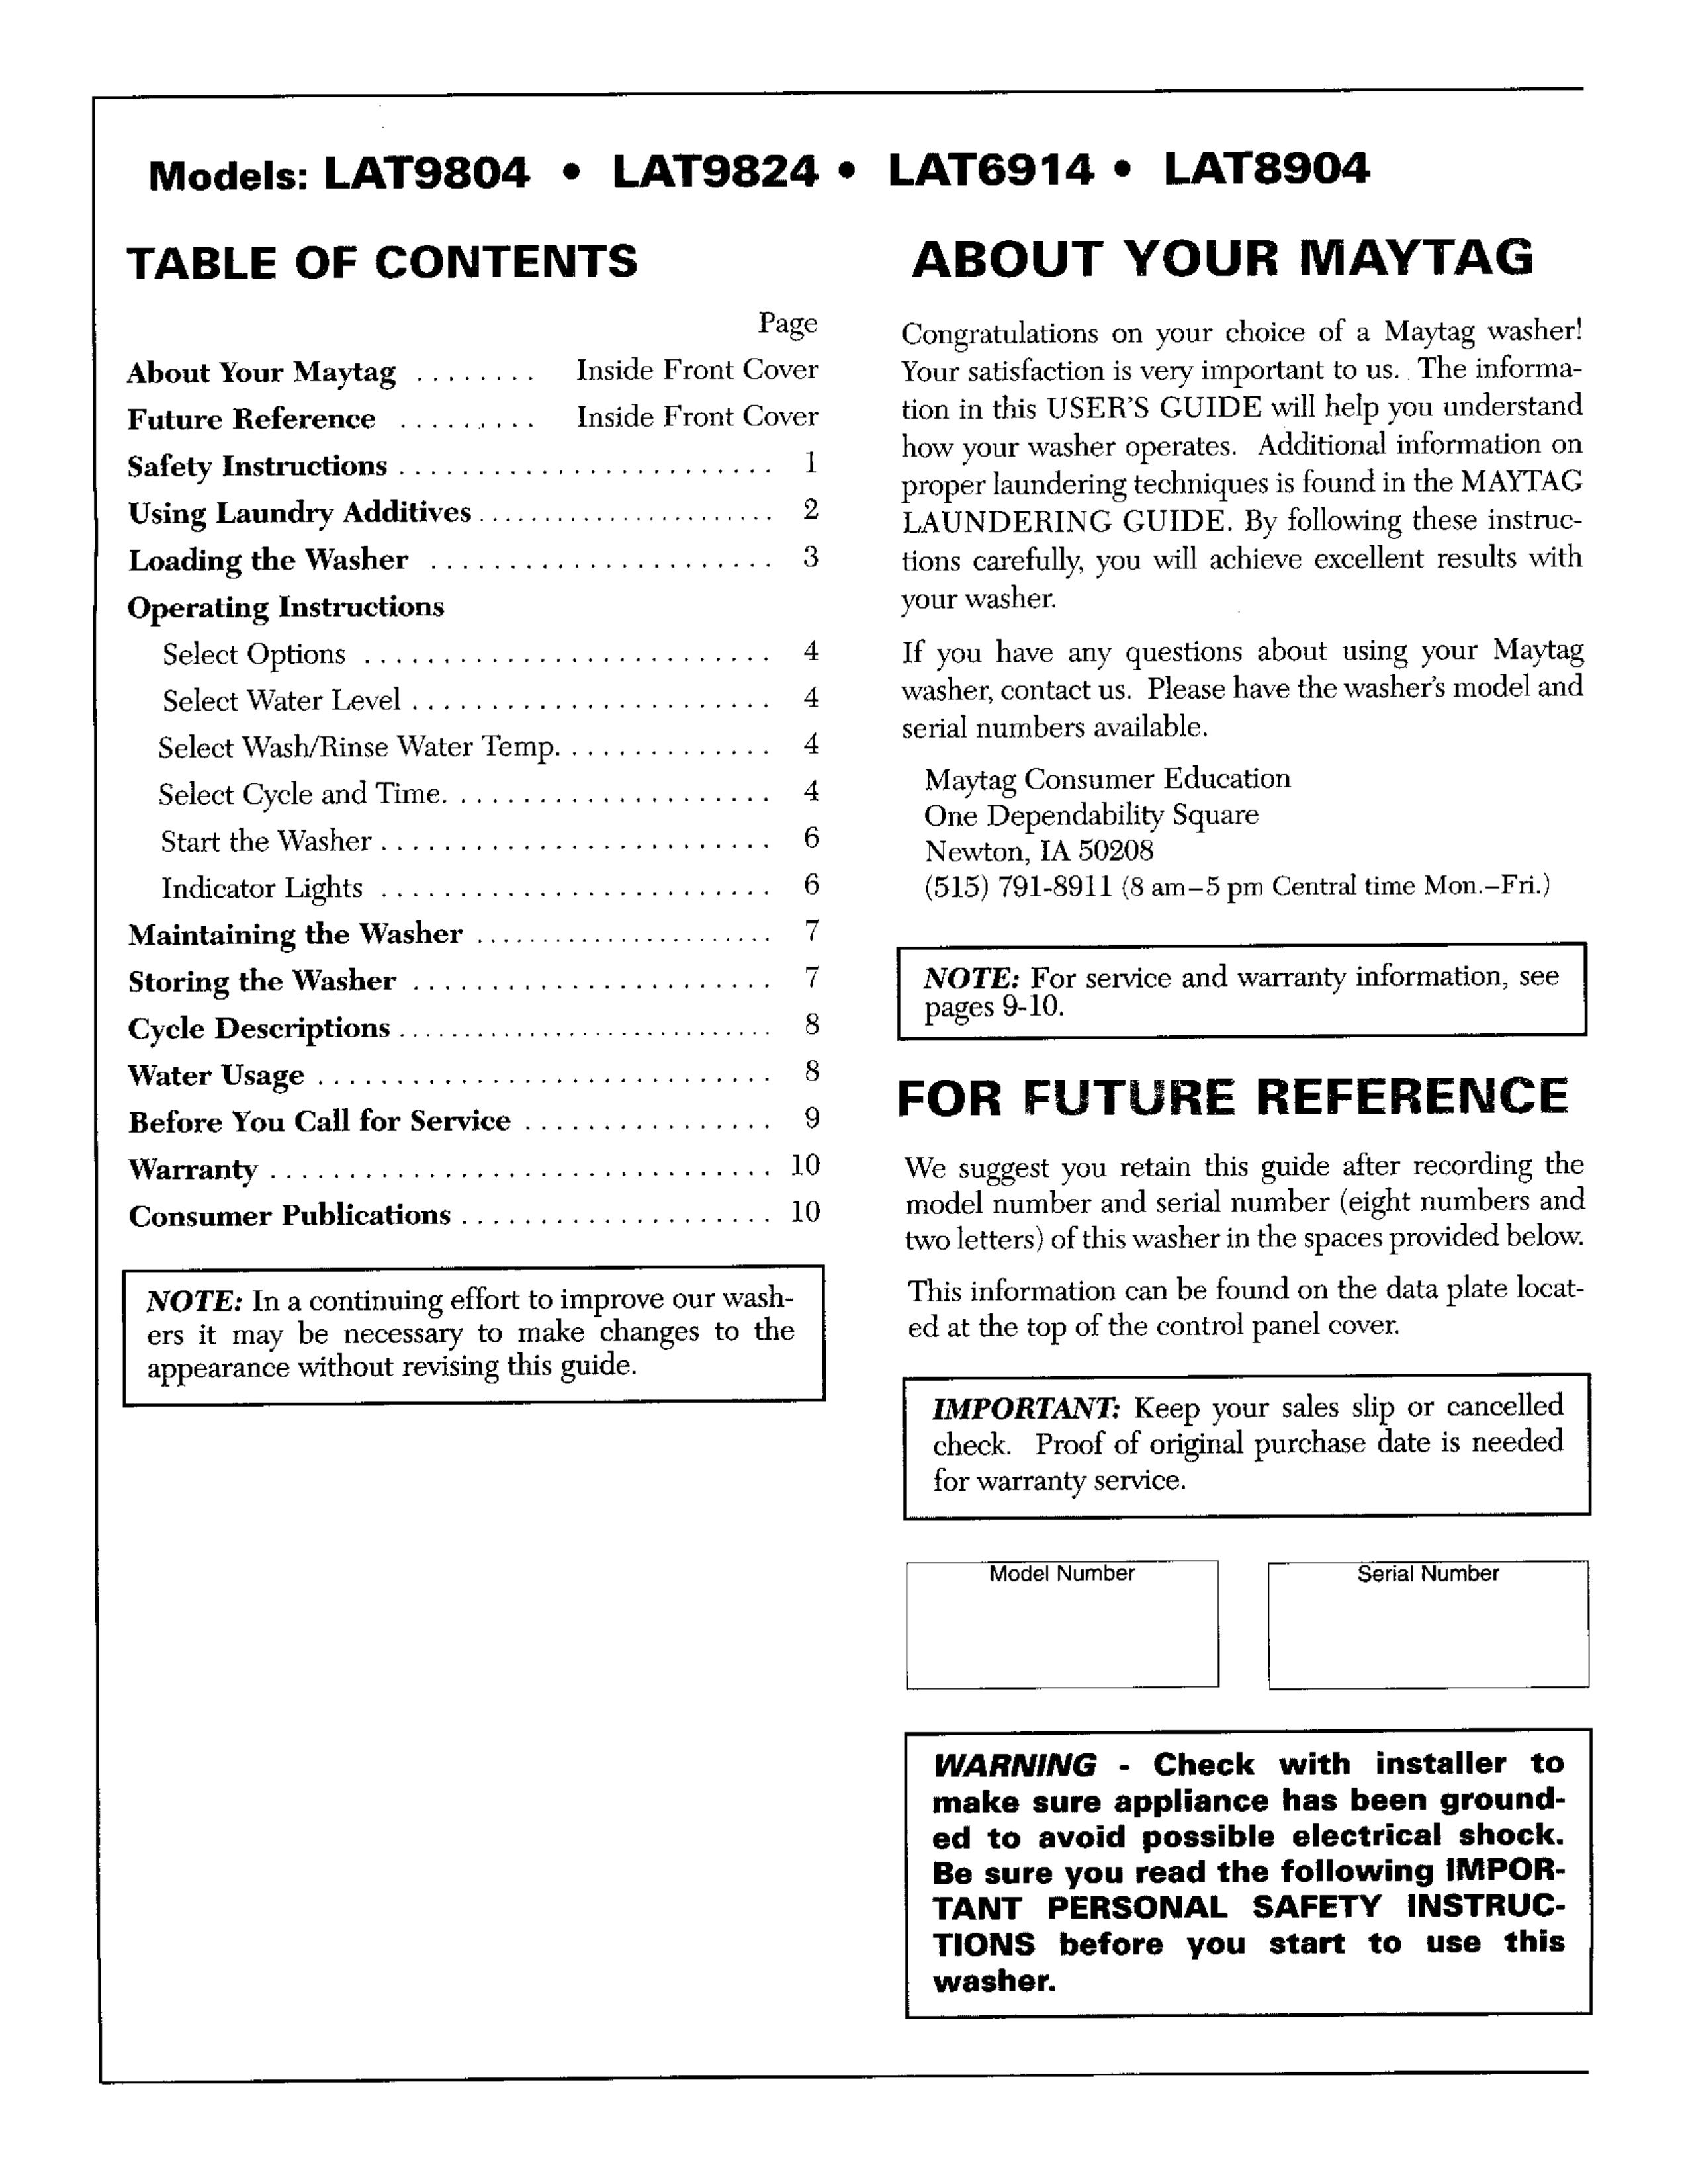 Maytag LAT8904 Washer/Dryer User Manual